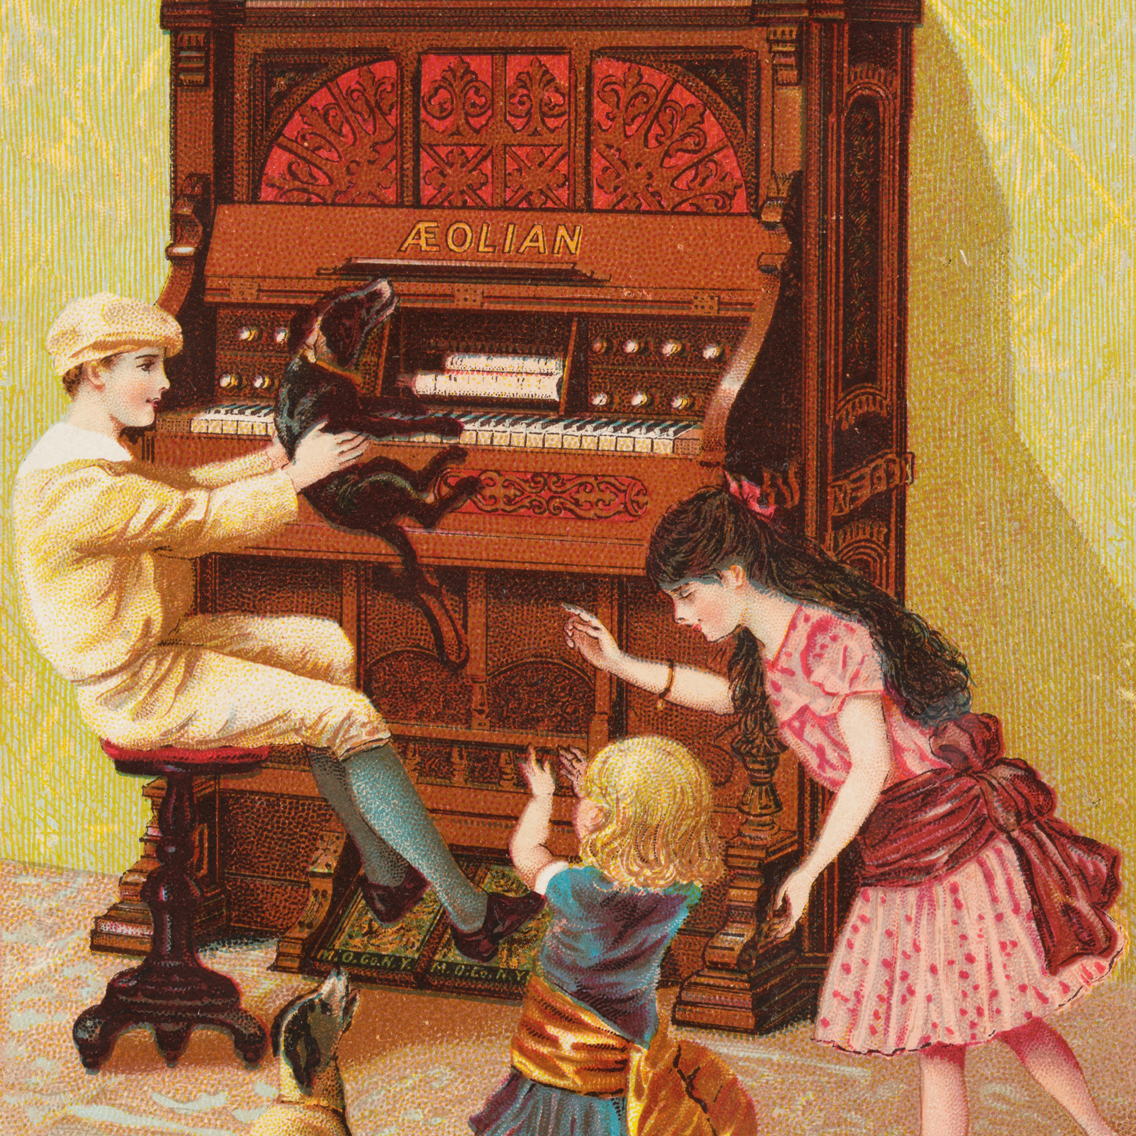 Vintage illustration of children around a piano